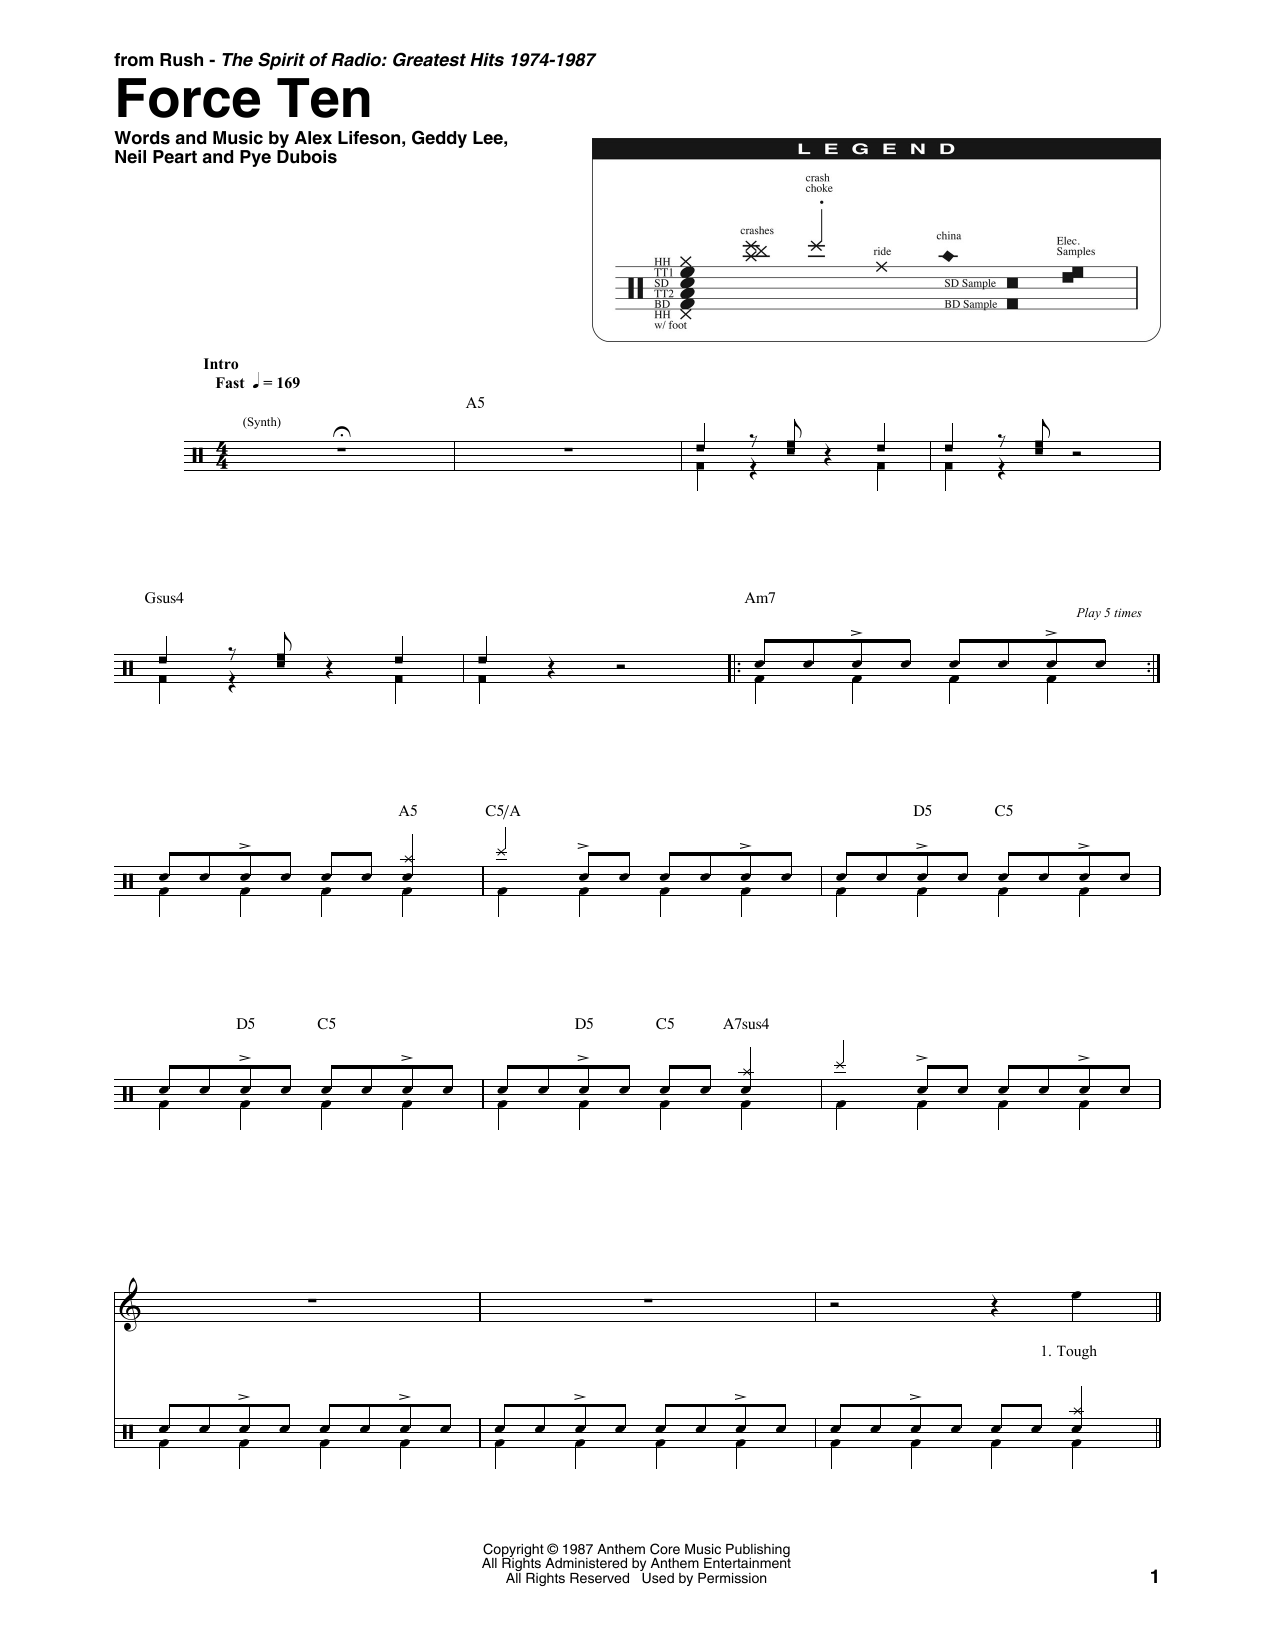 Rush Force Ten Sheet Music Notes & Chords for Bass Guitar Tab - Download or Print PDF